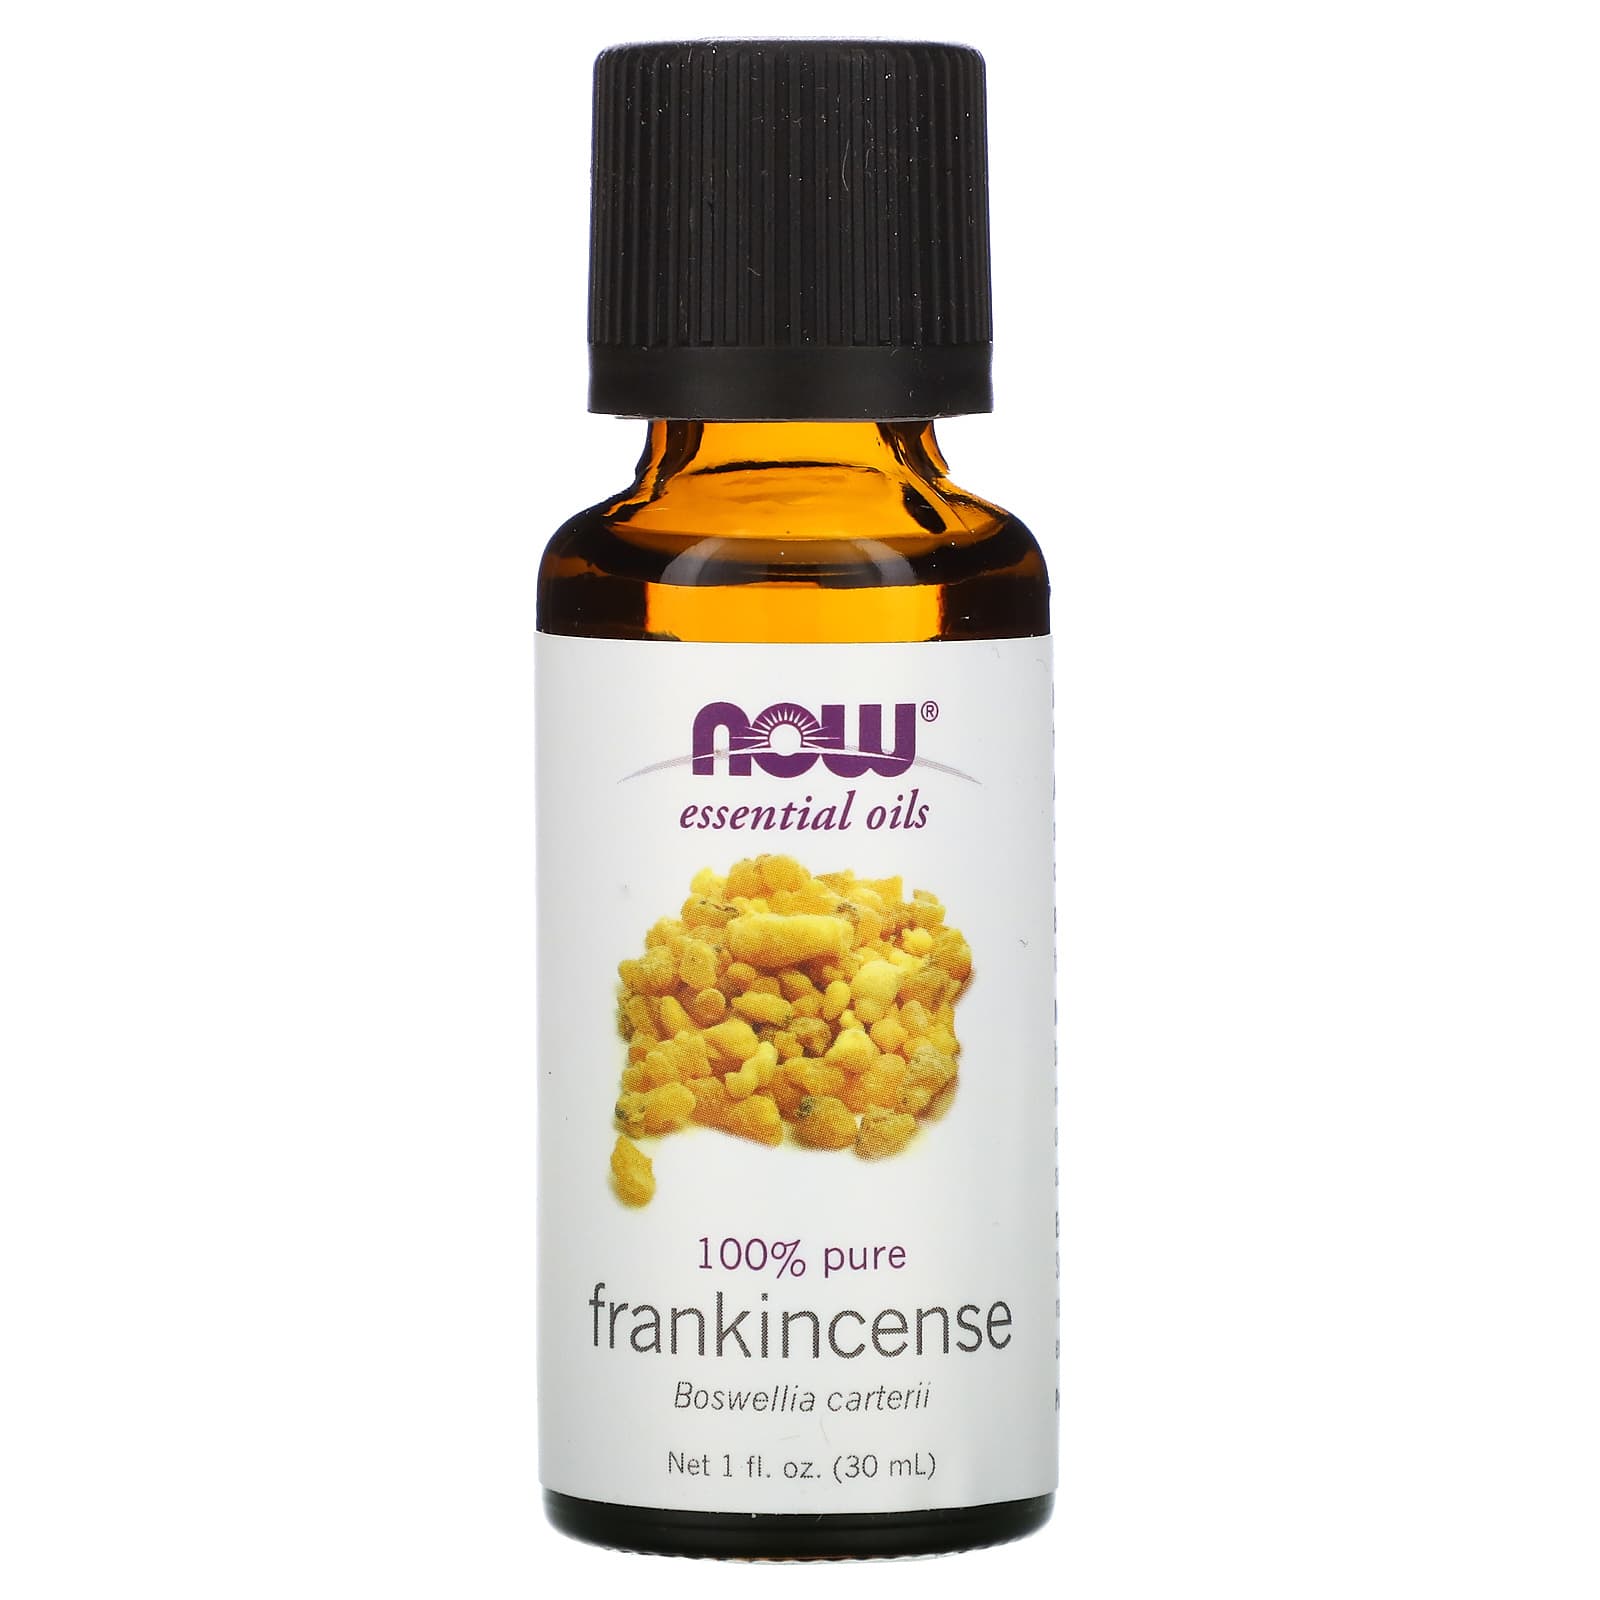 Frankincense Oil, Shop for NOW Essential Oils